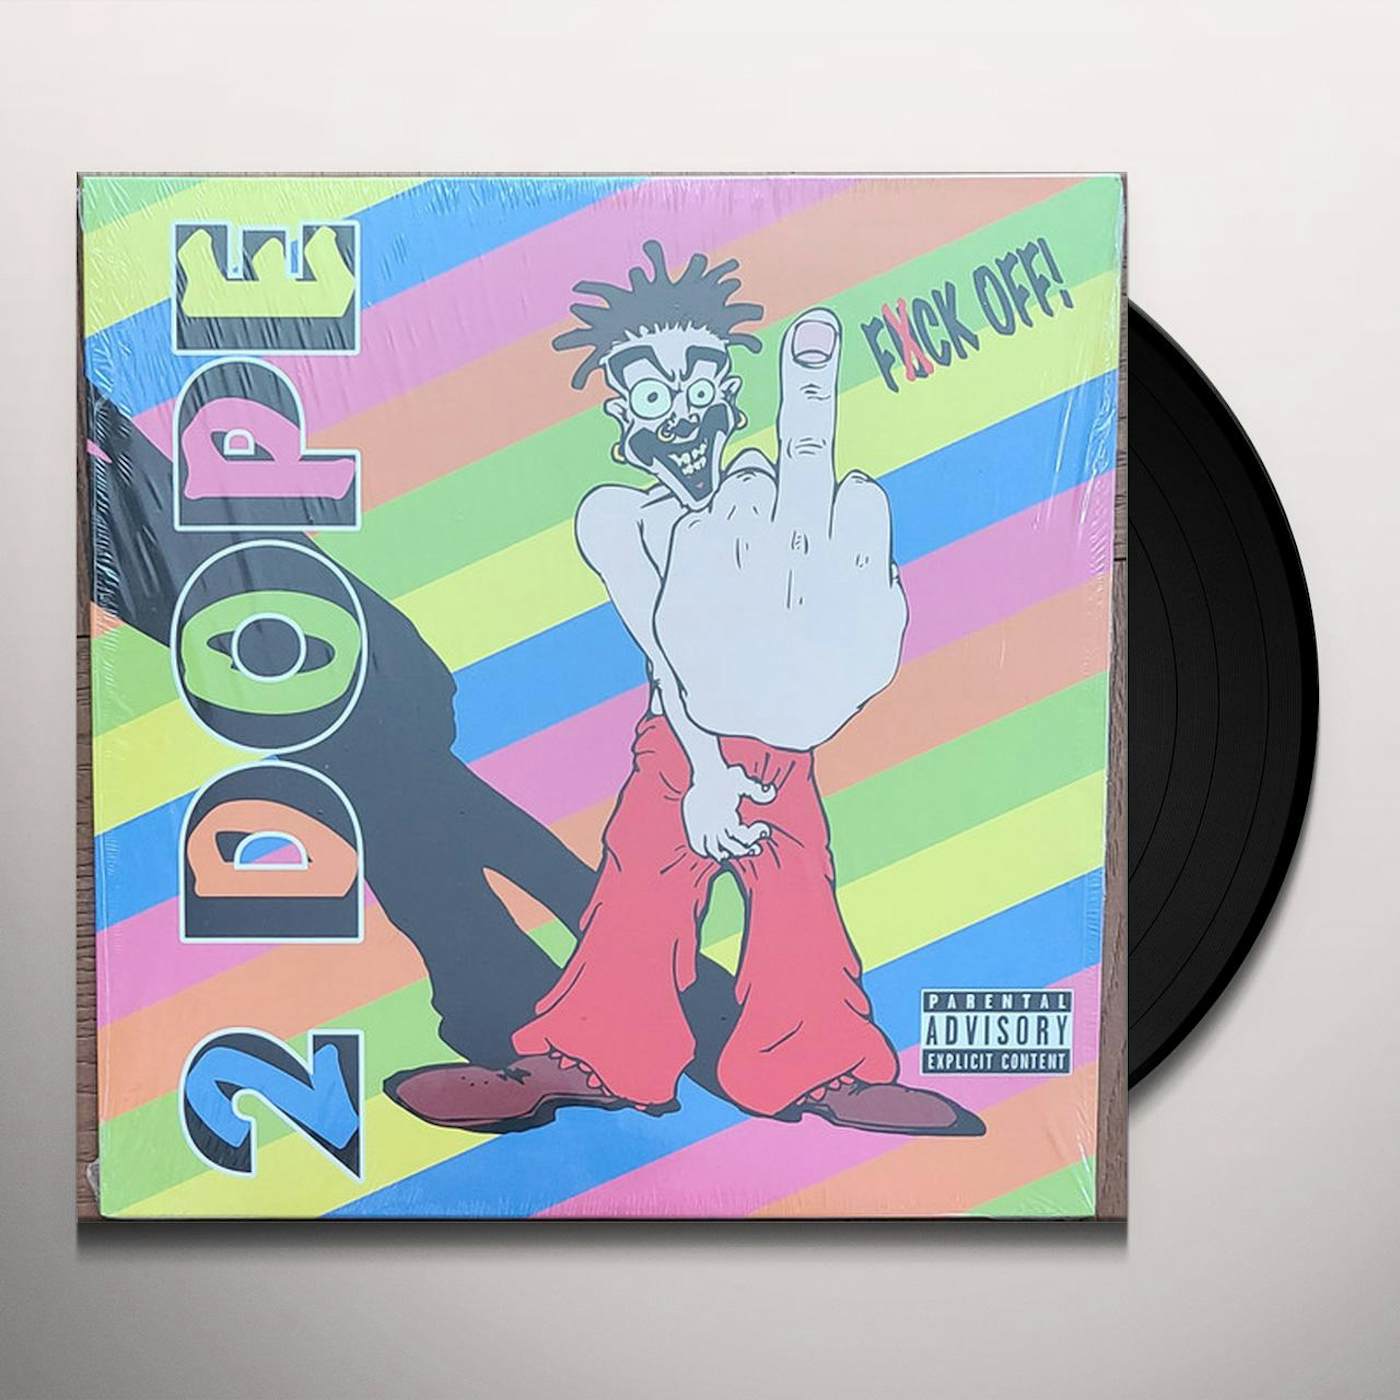 Shaggy 2 Dope Fuck Off Vinyl Record